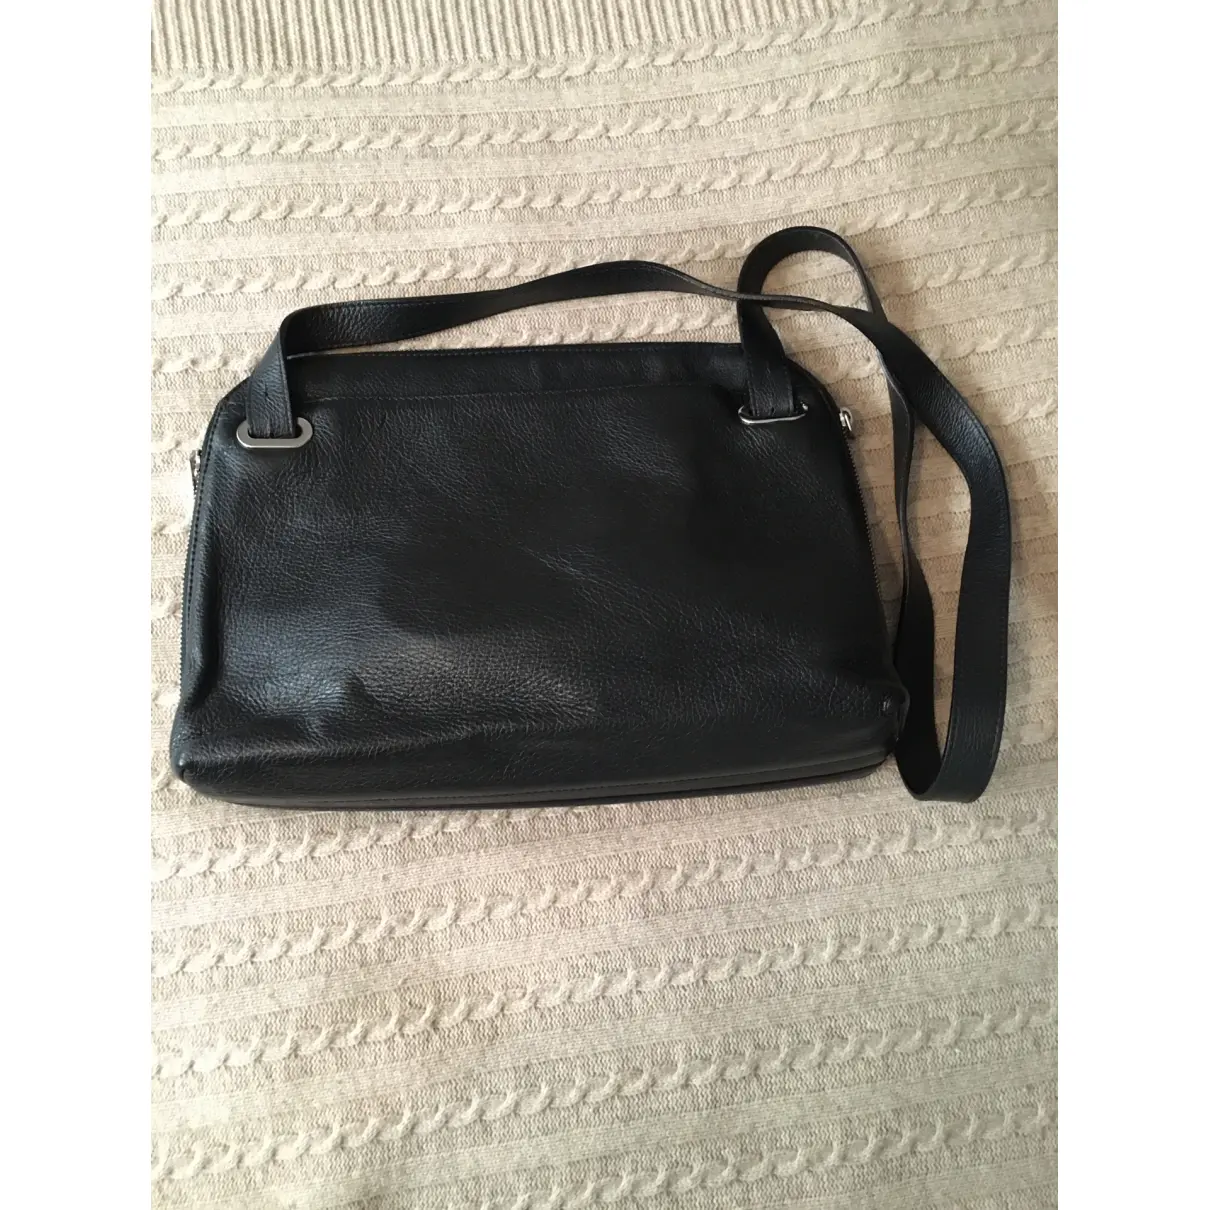 Buy Cos Leather handbag online